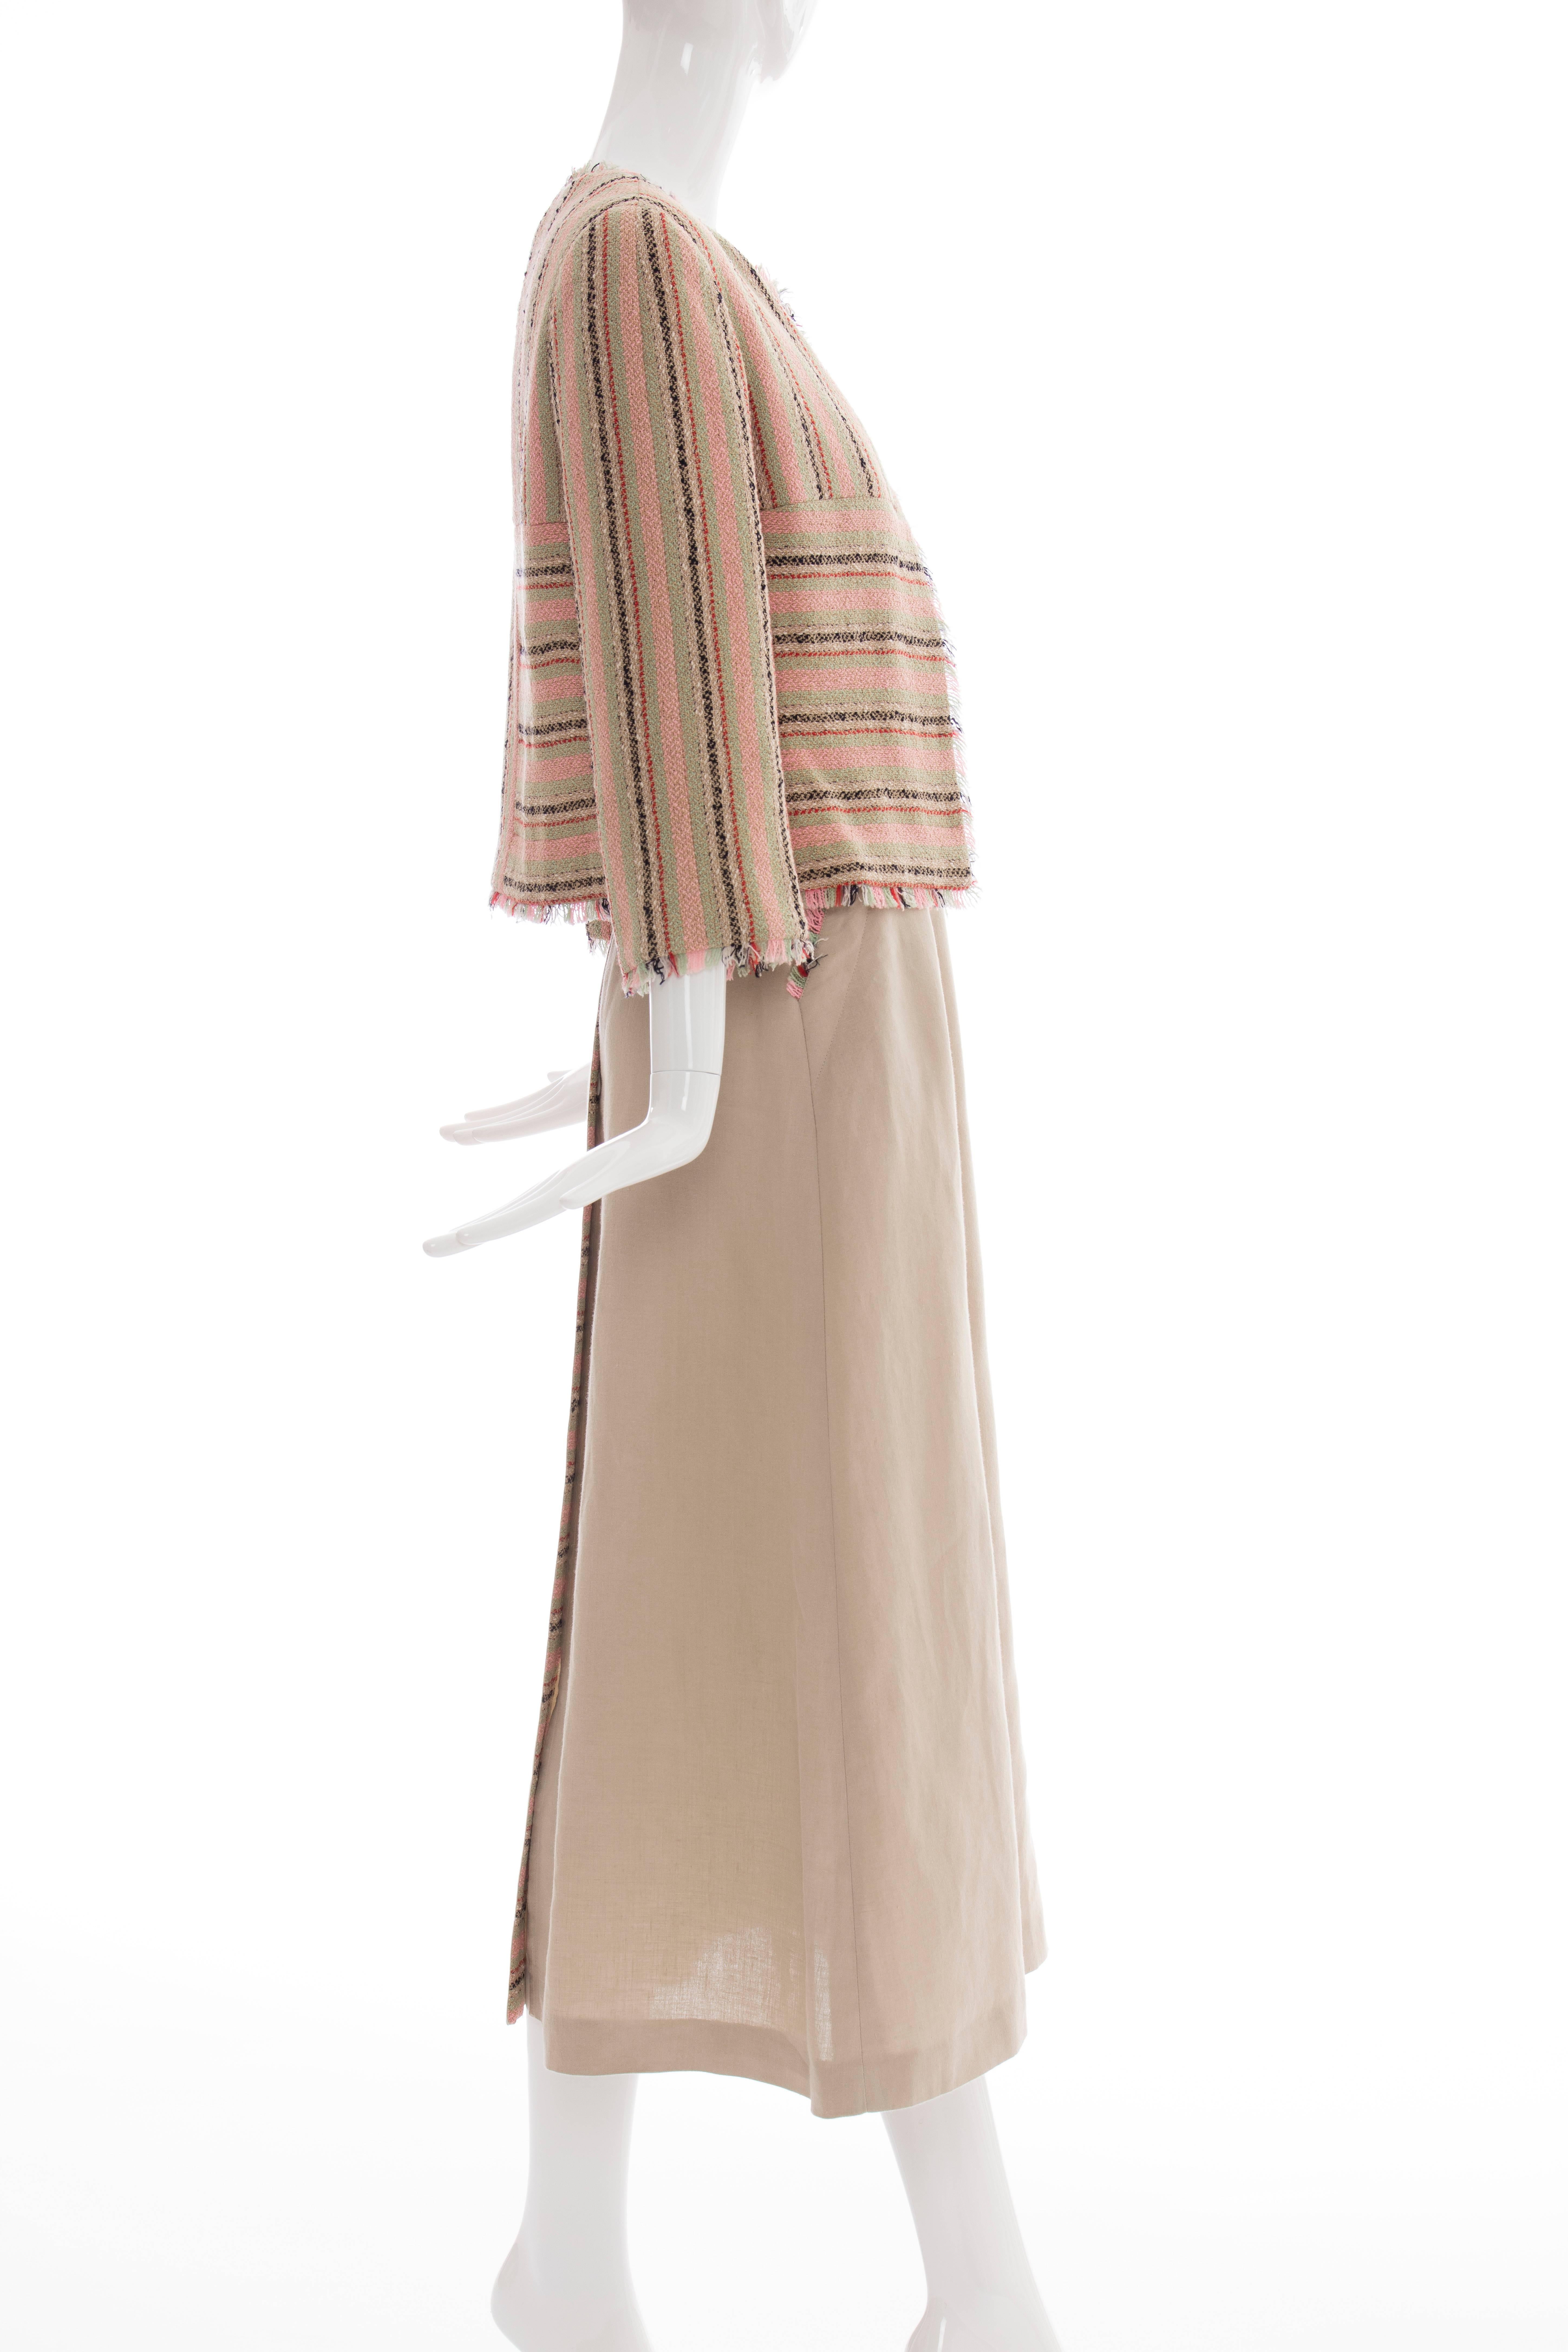 Chanel Three Piece Linen Skirt Suit, Resort 2000 In Excellent Condition For Sale In Cincinnati, OH